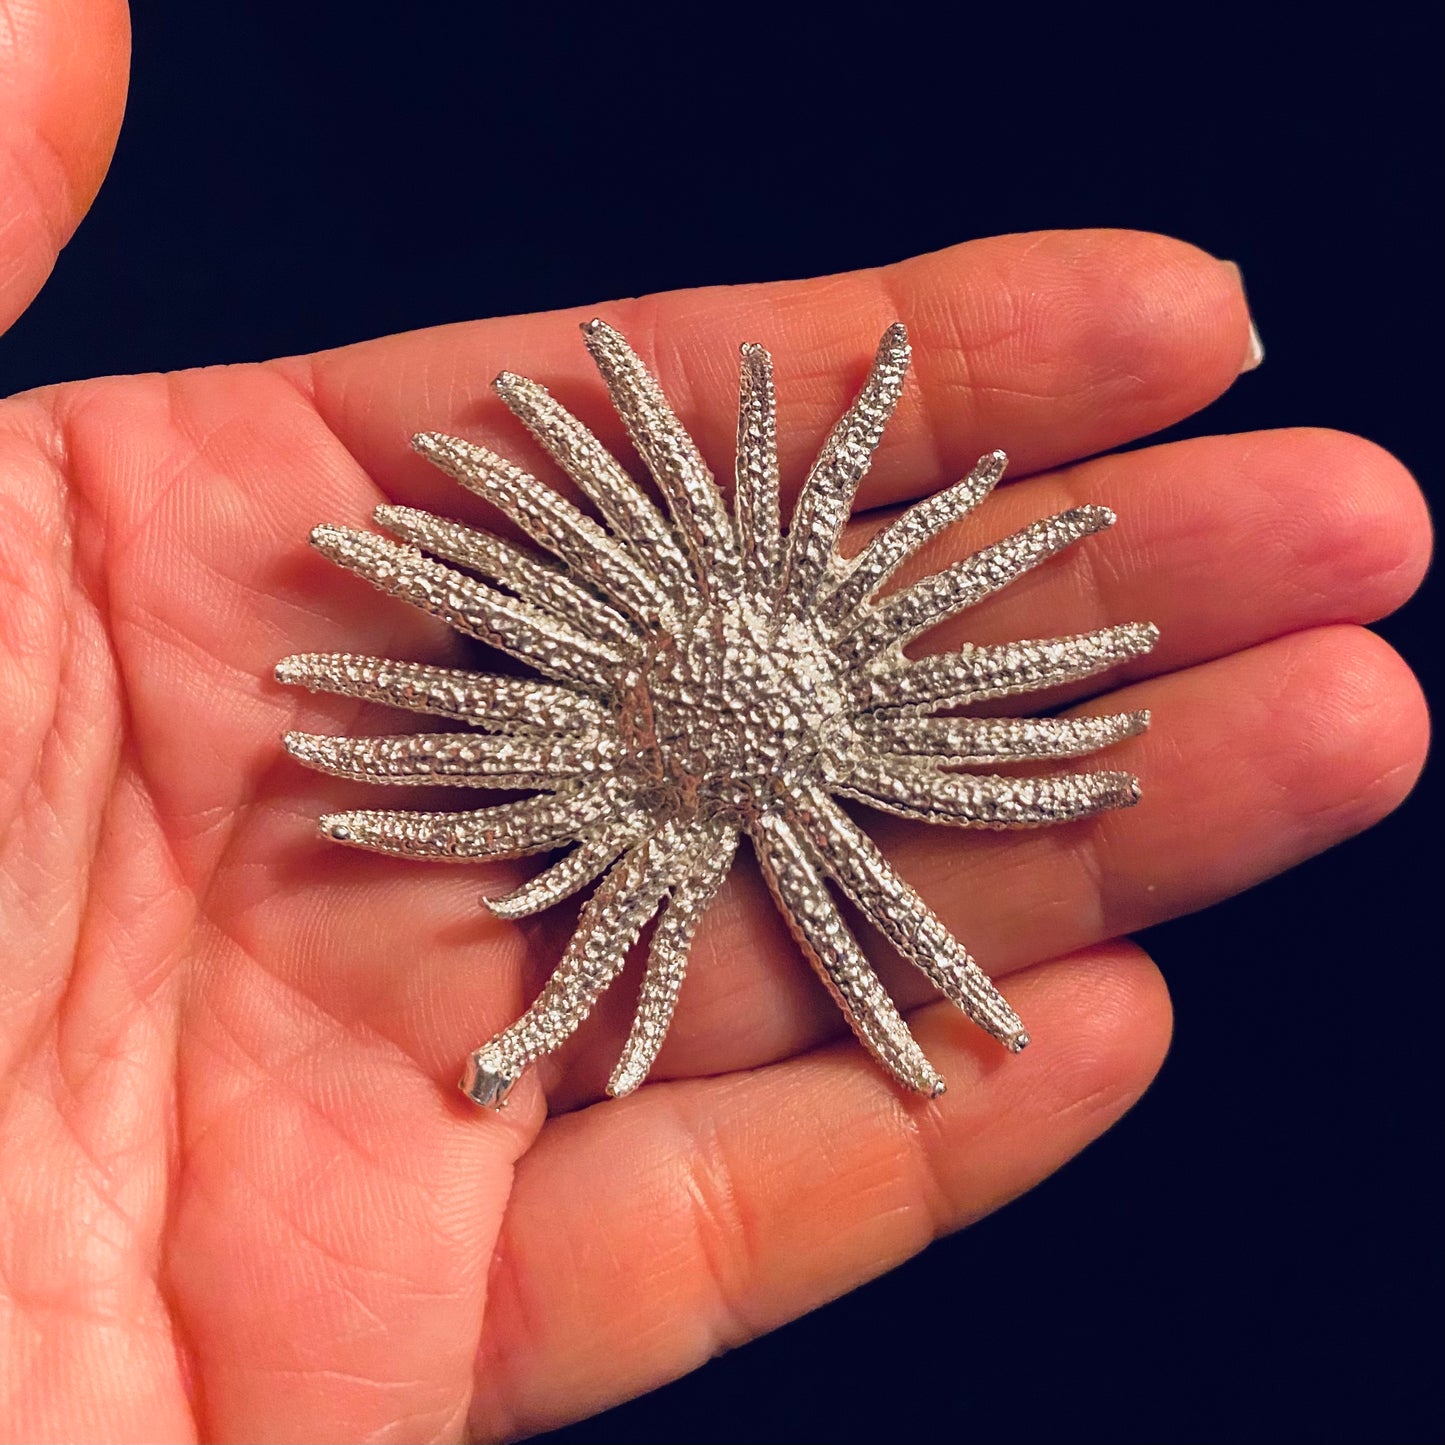 Sunflower Sea Star Casting for Jewelry Design